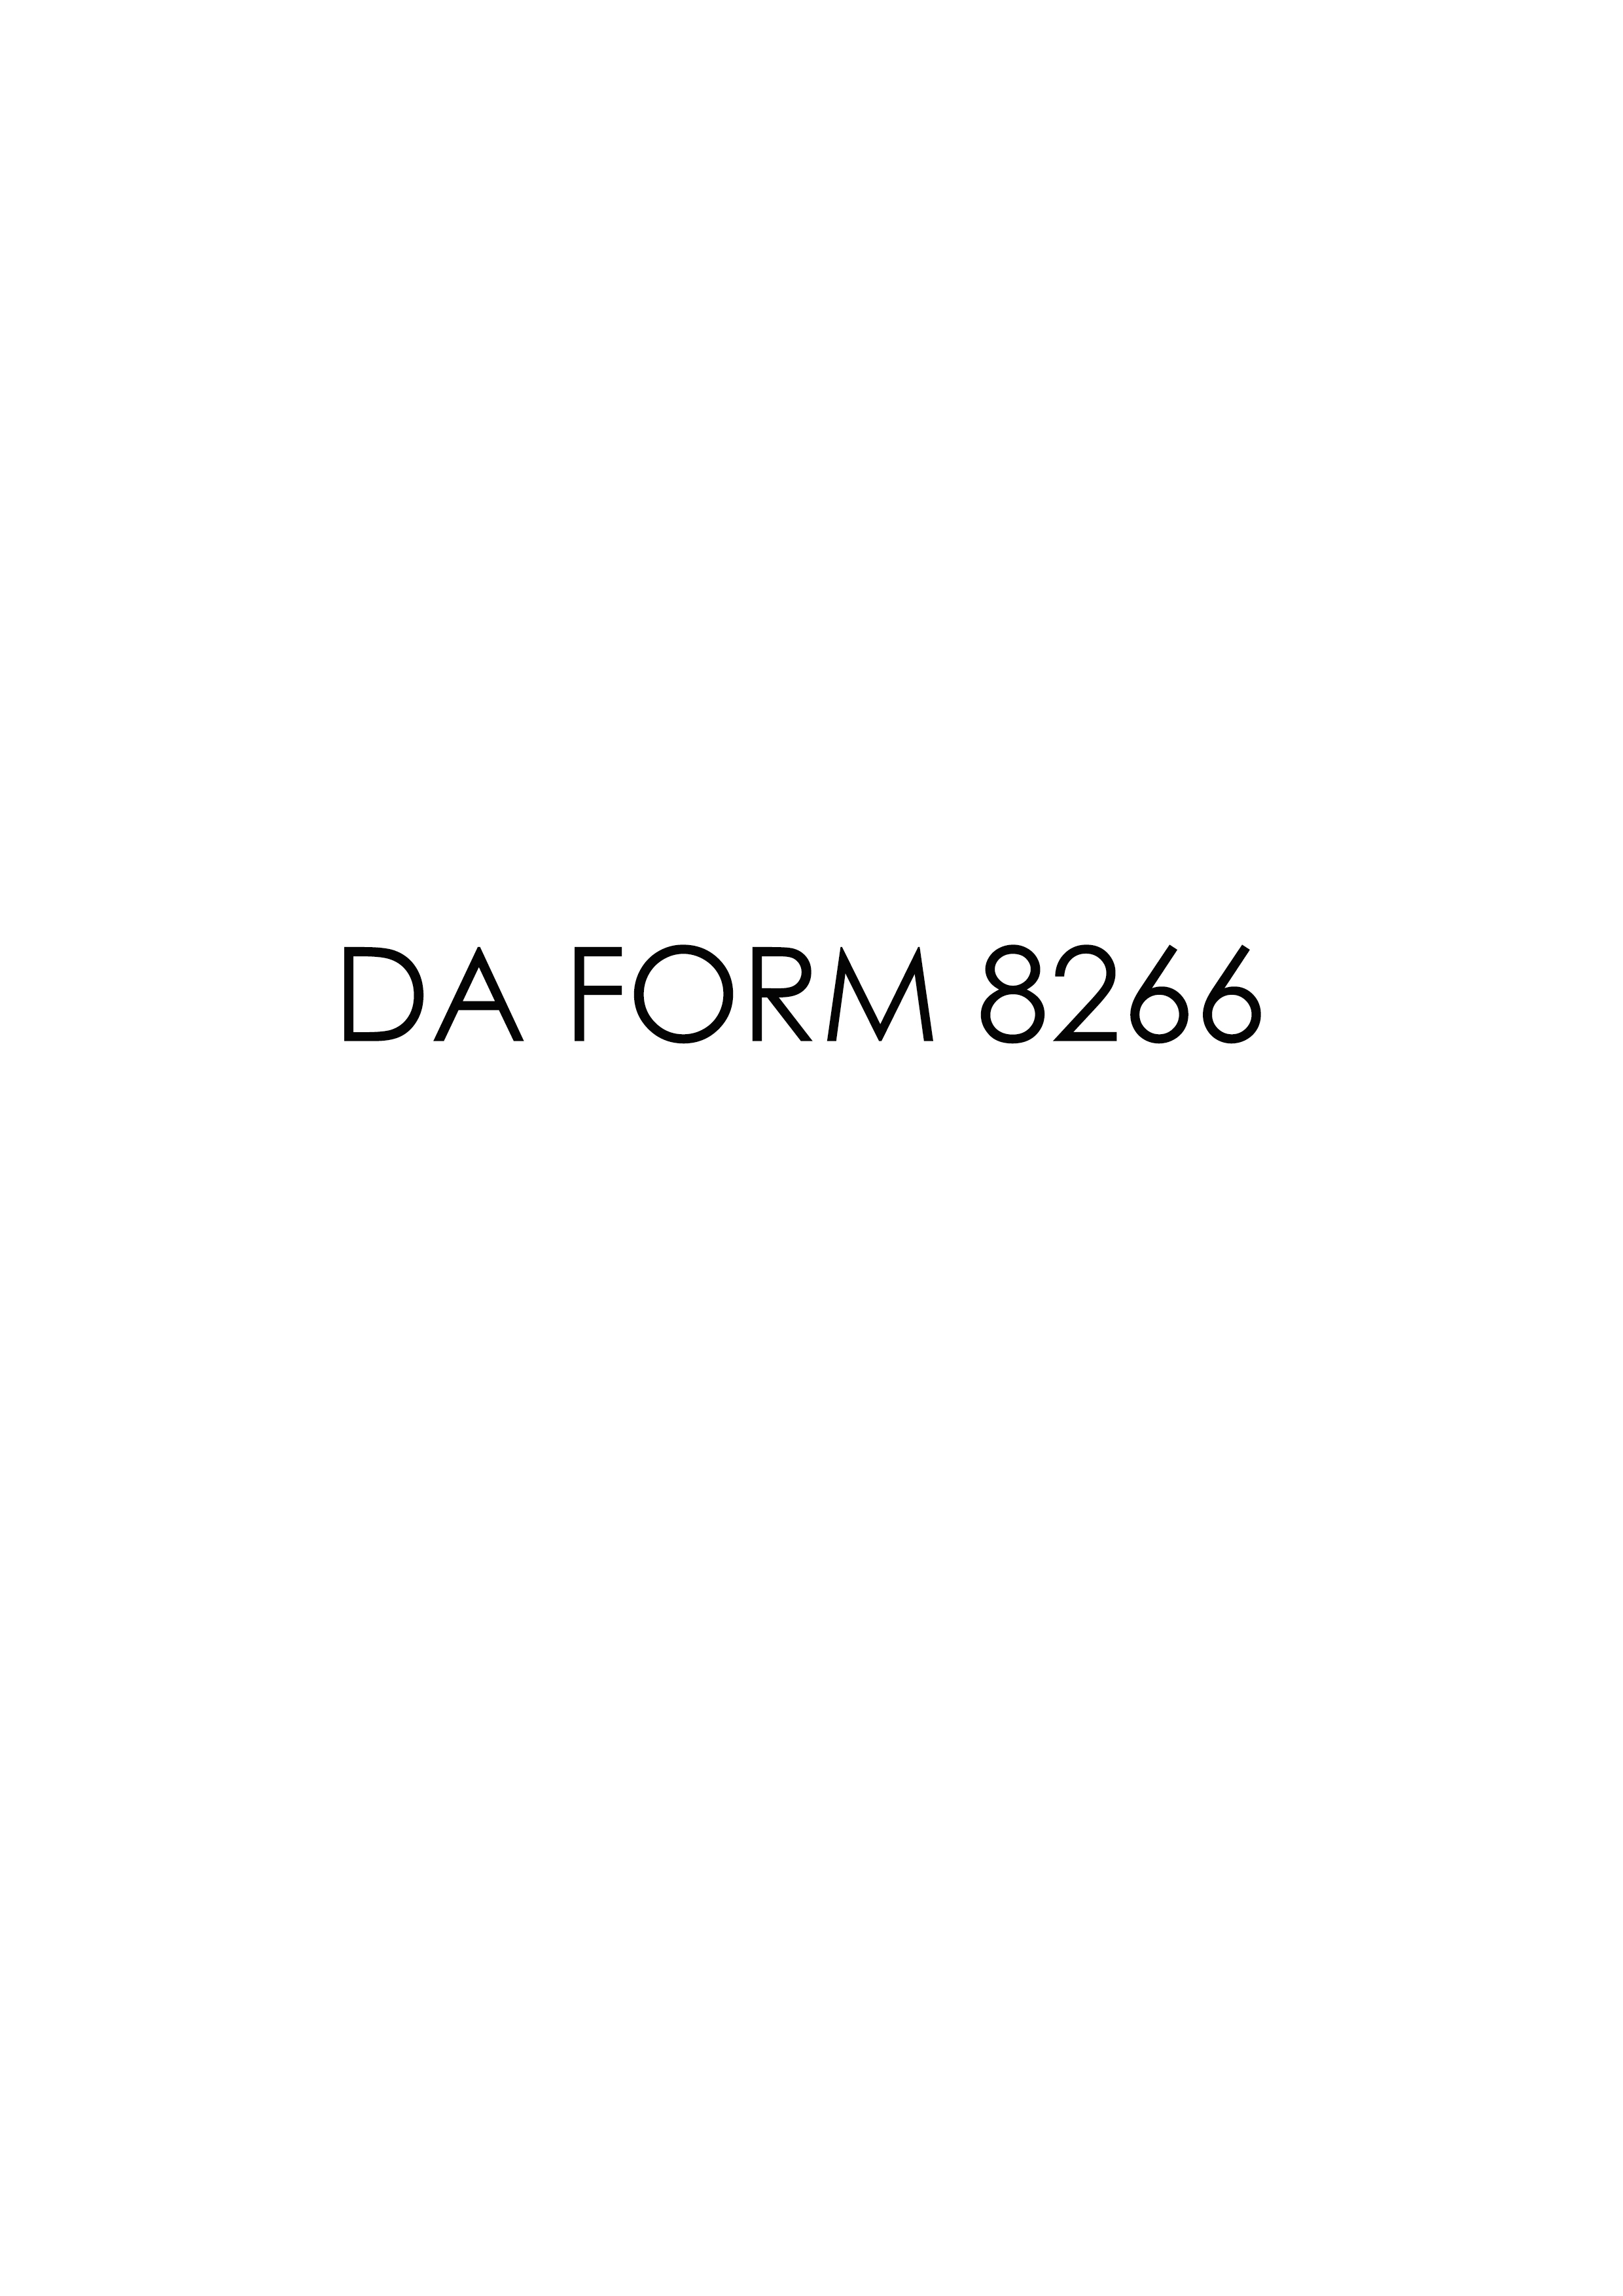 da Form 8266 fillable